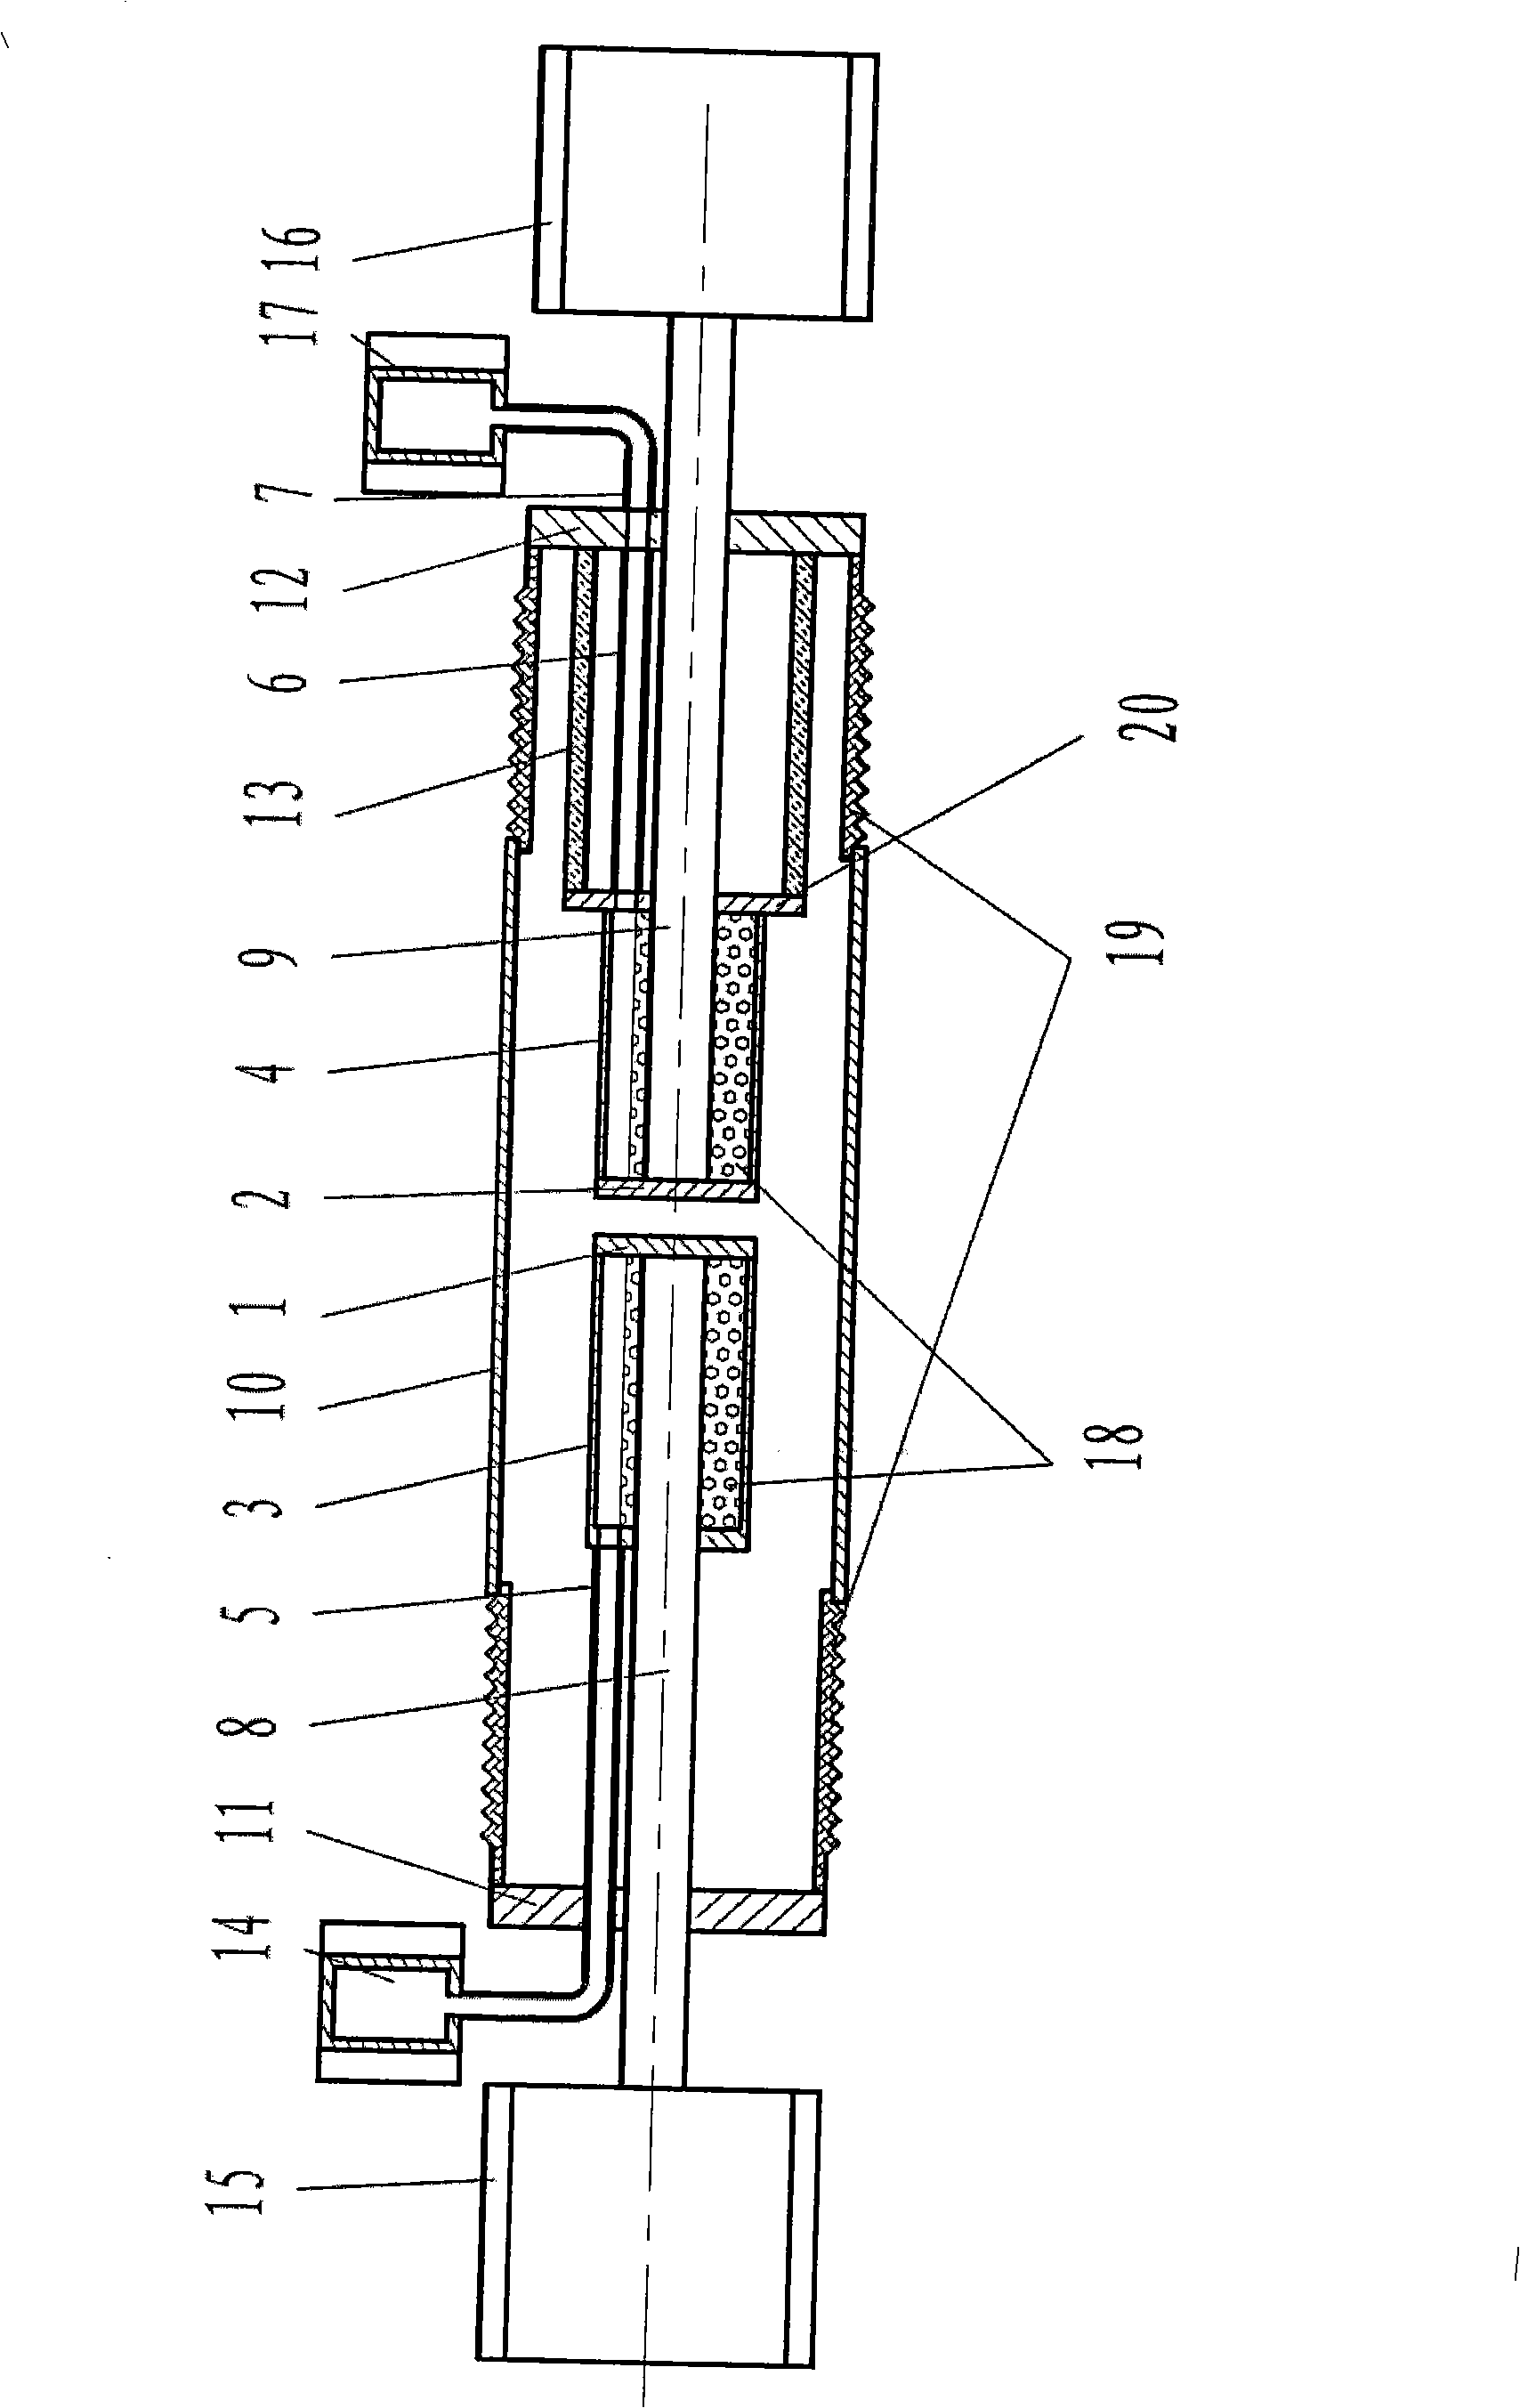 Heat pipe type vacuum switch